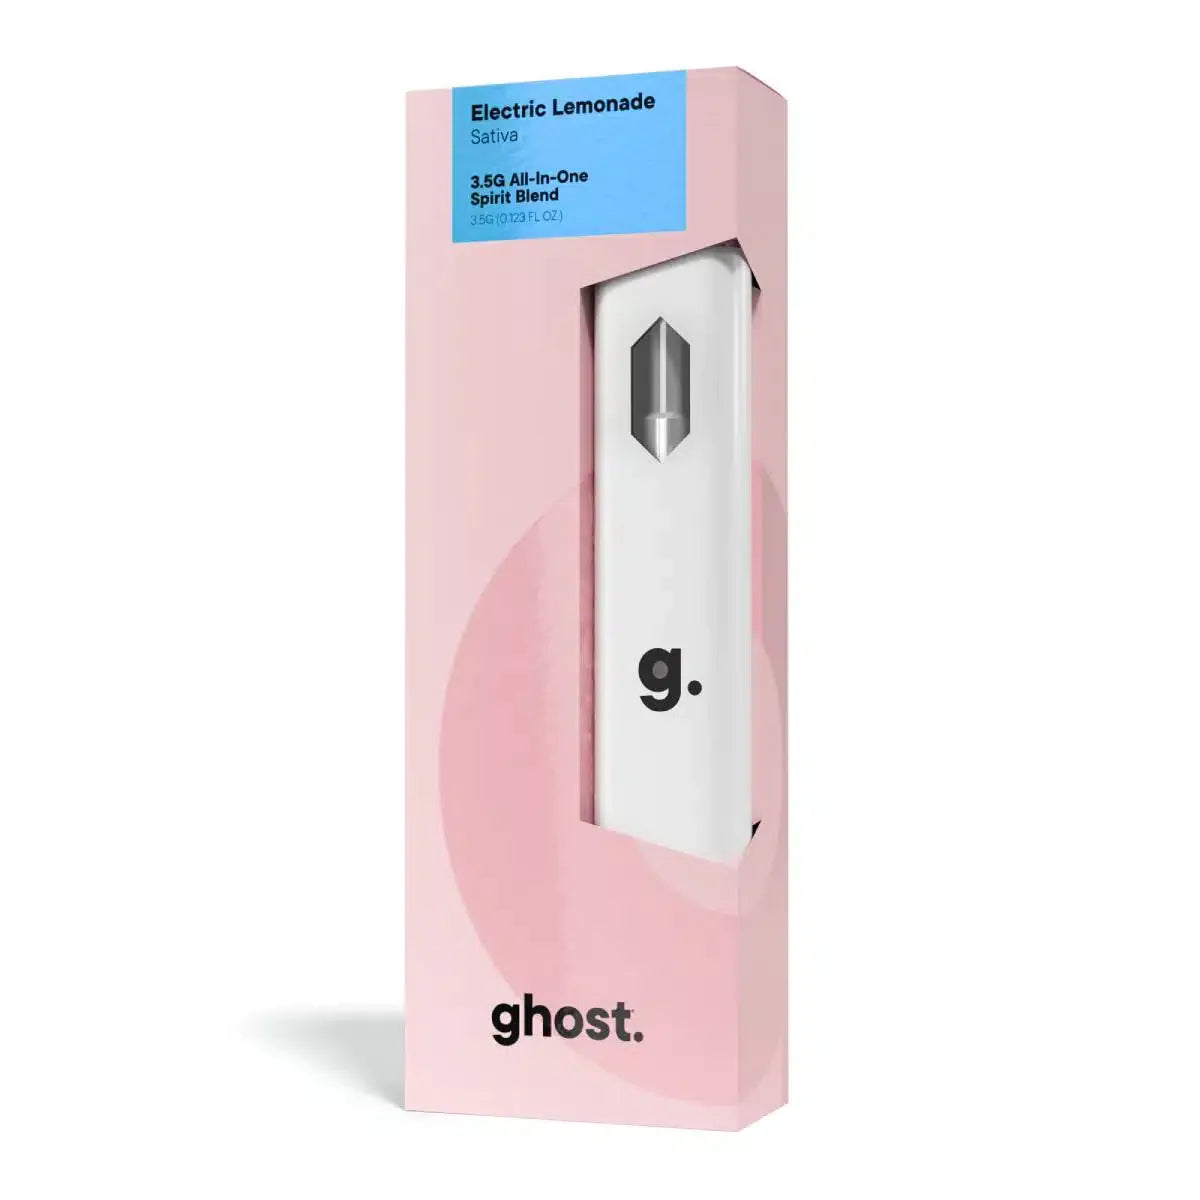 Ghost Spirit Blend Live Badder Disposable Vapes 3.5g Best Price